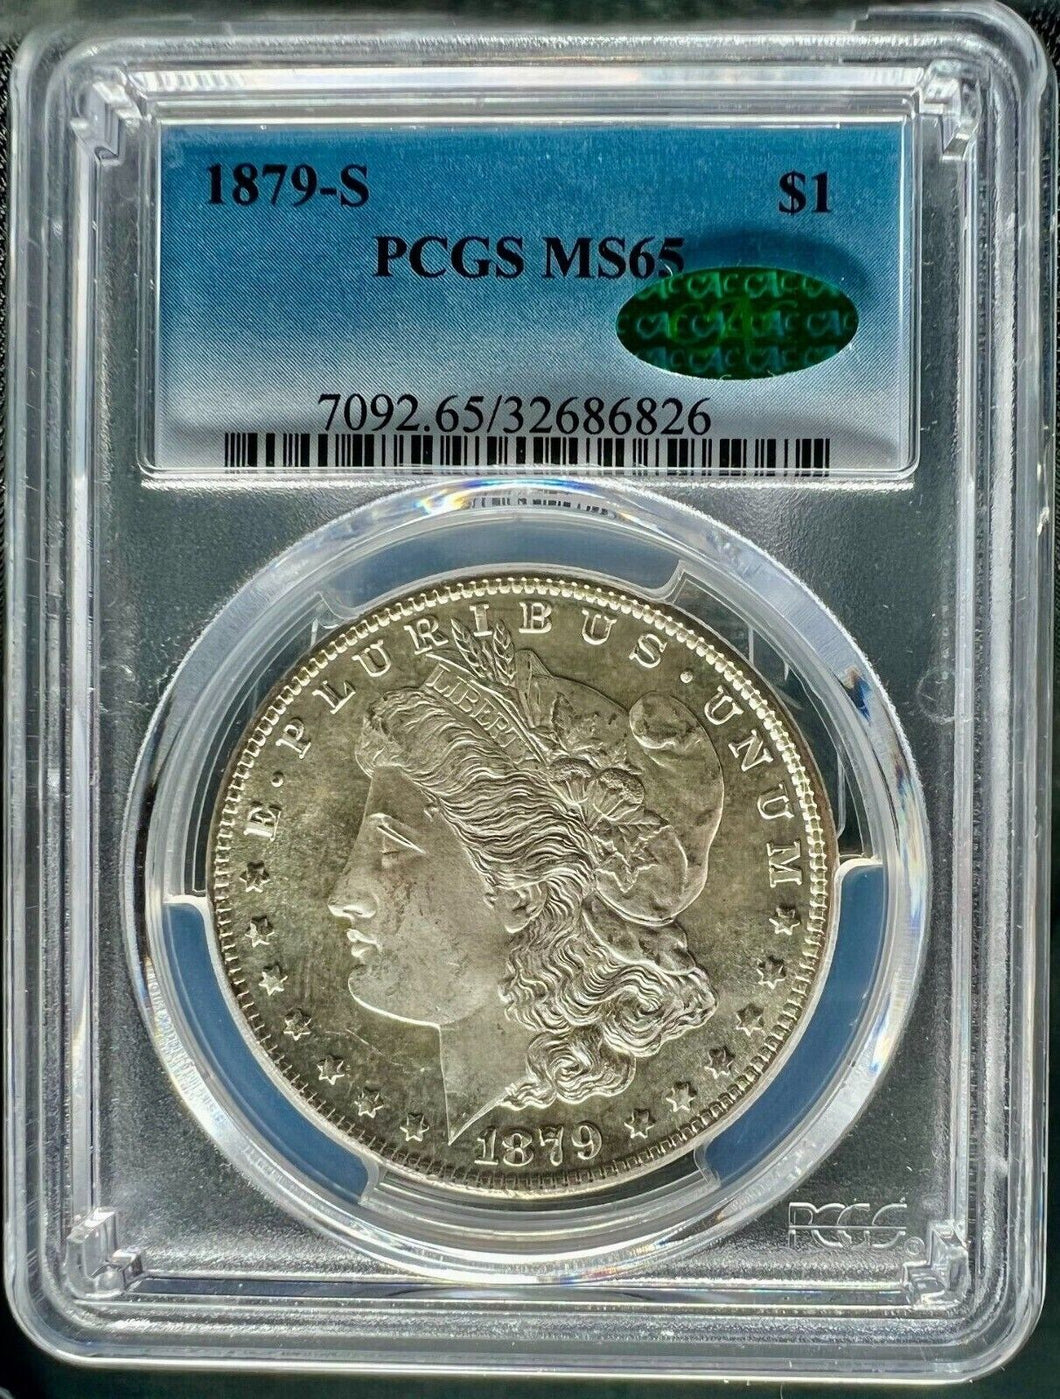 1879-S $1 Morgan Silver Dollar PCGS MS65 (CAC) - - Frosty Blast White Gem